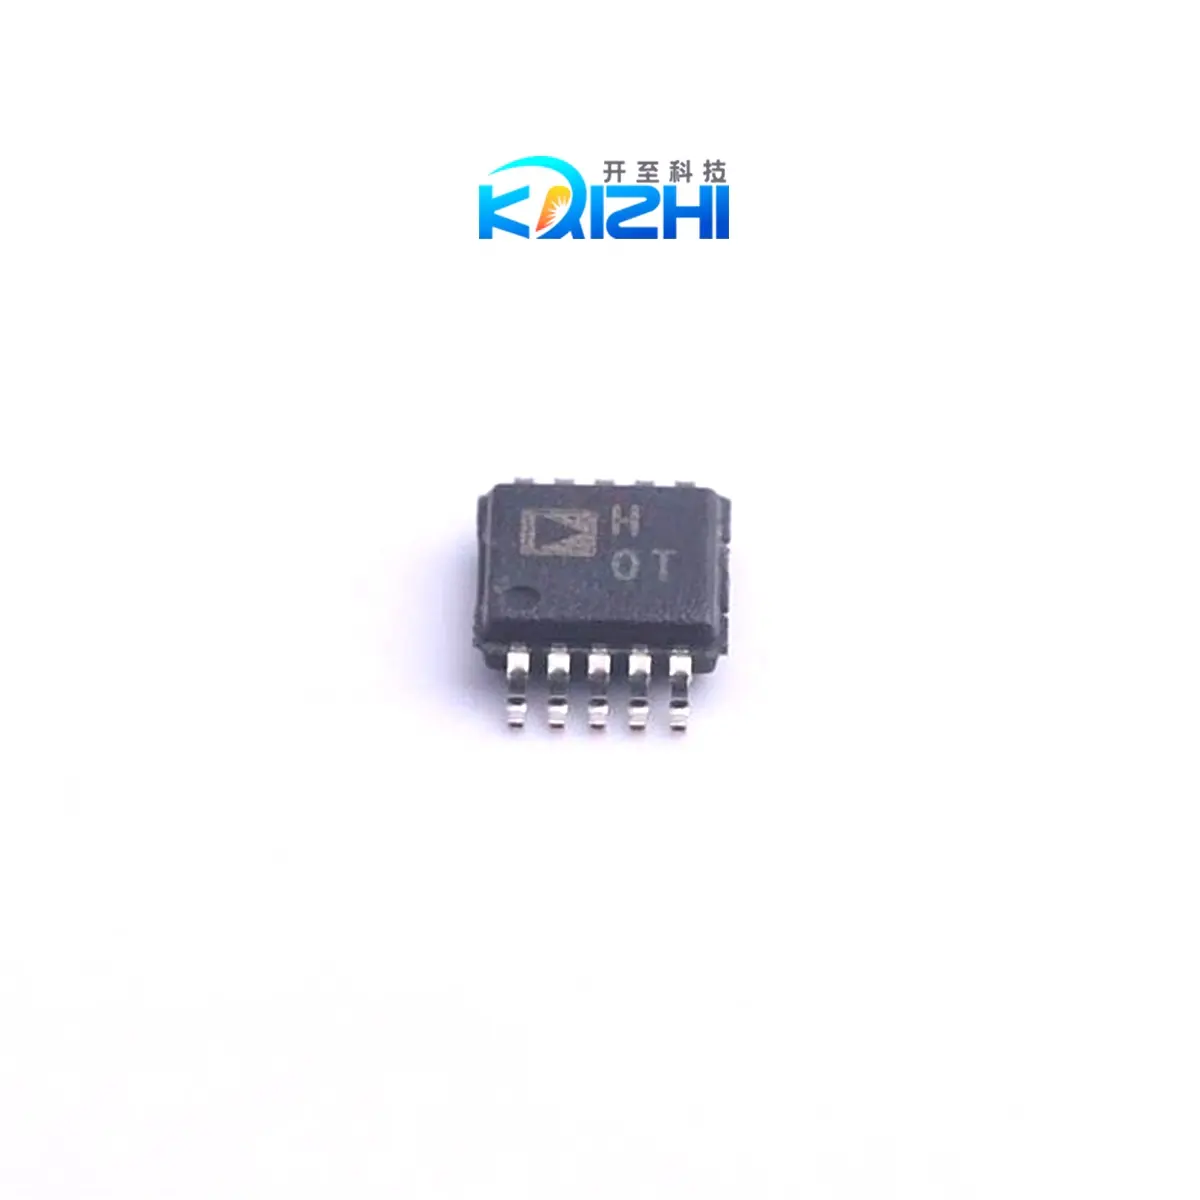 Chip ic ad8251, amplificador linear element MSOP-10 AD8251ARMZ-R7